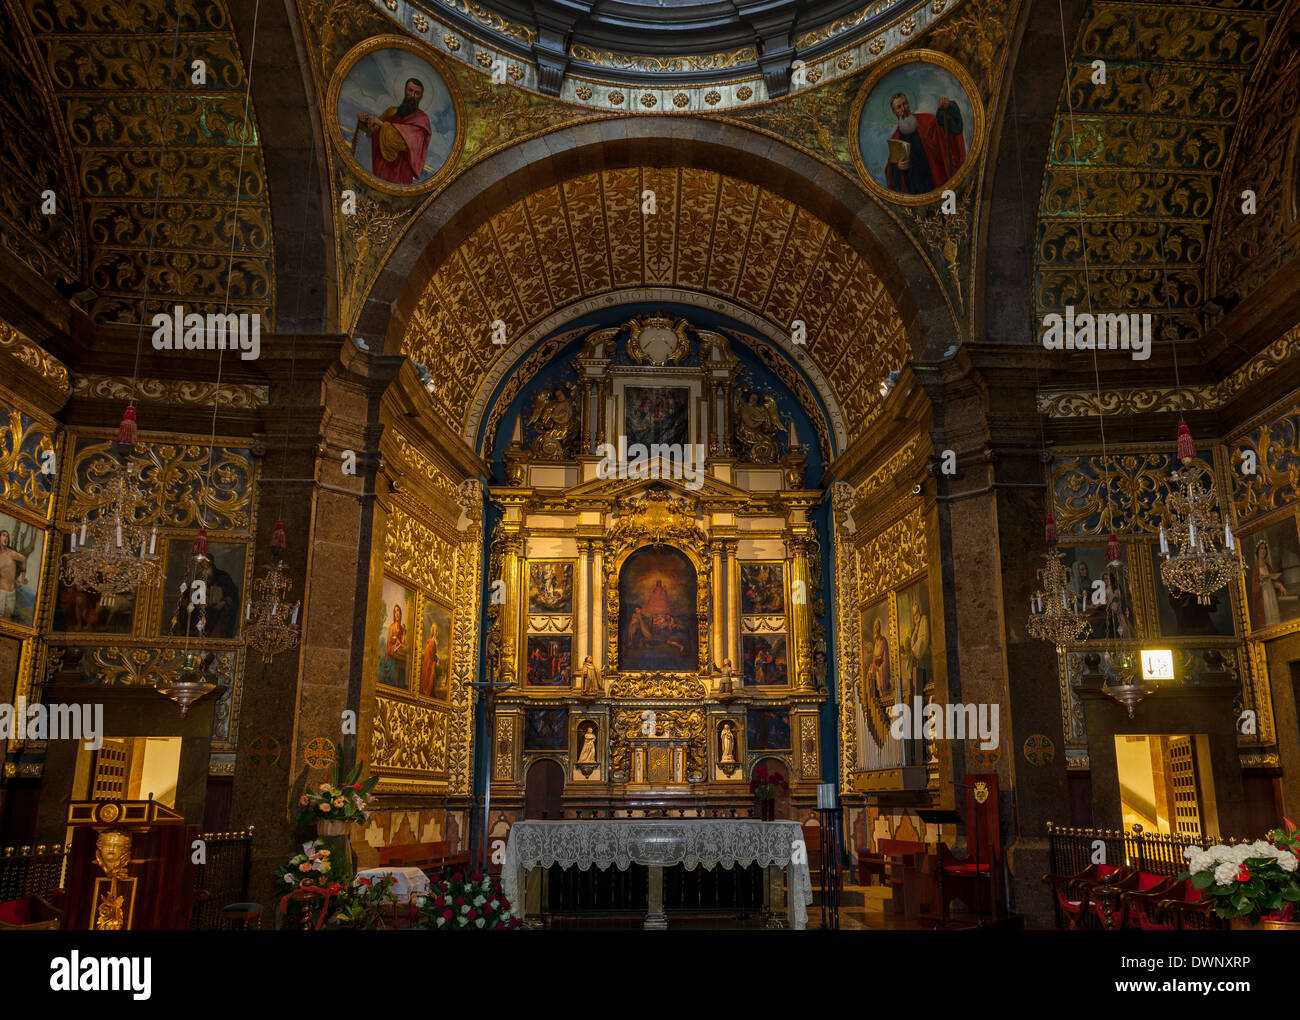 Reich verzierten Altar, Santuari de Lluc Kloster, Mallorca, Balearen, Spanien Stockfoto